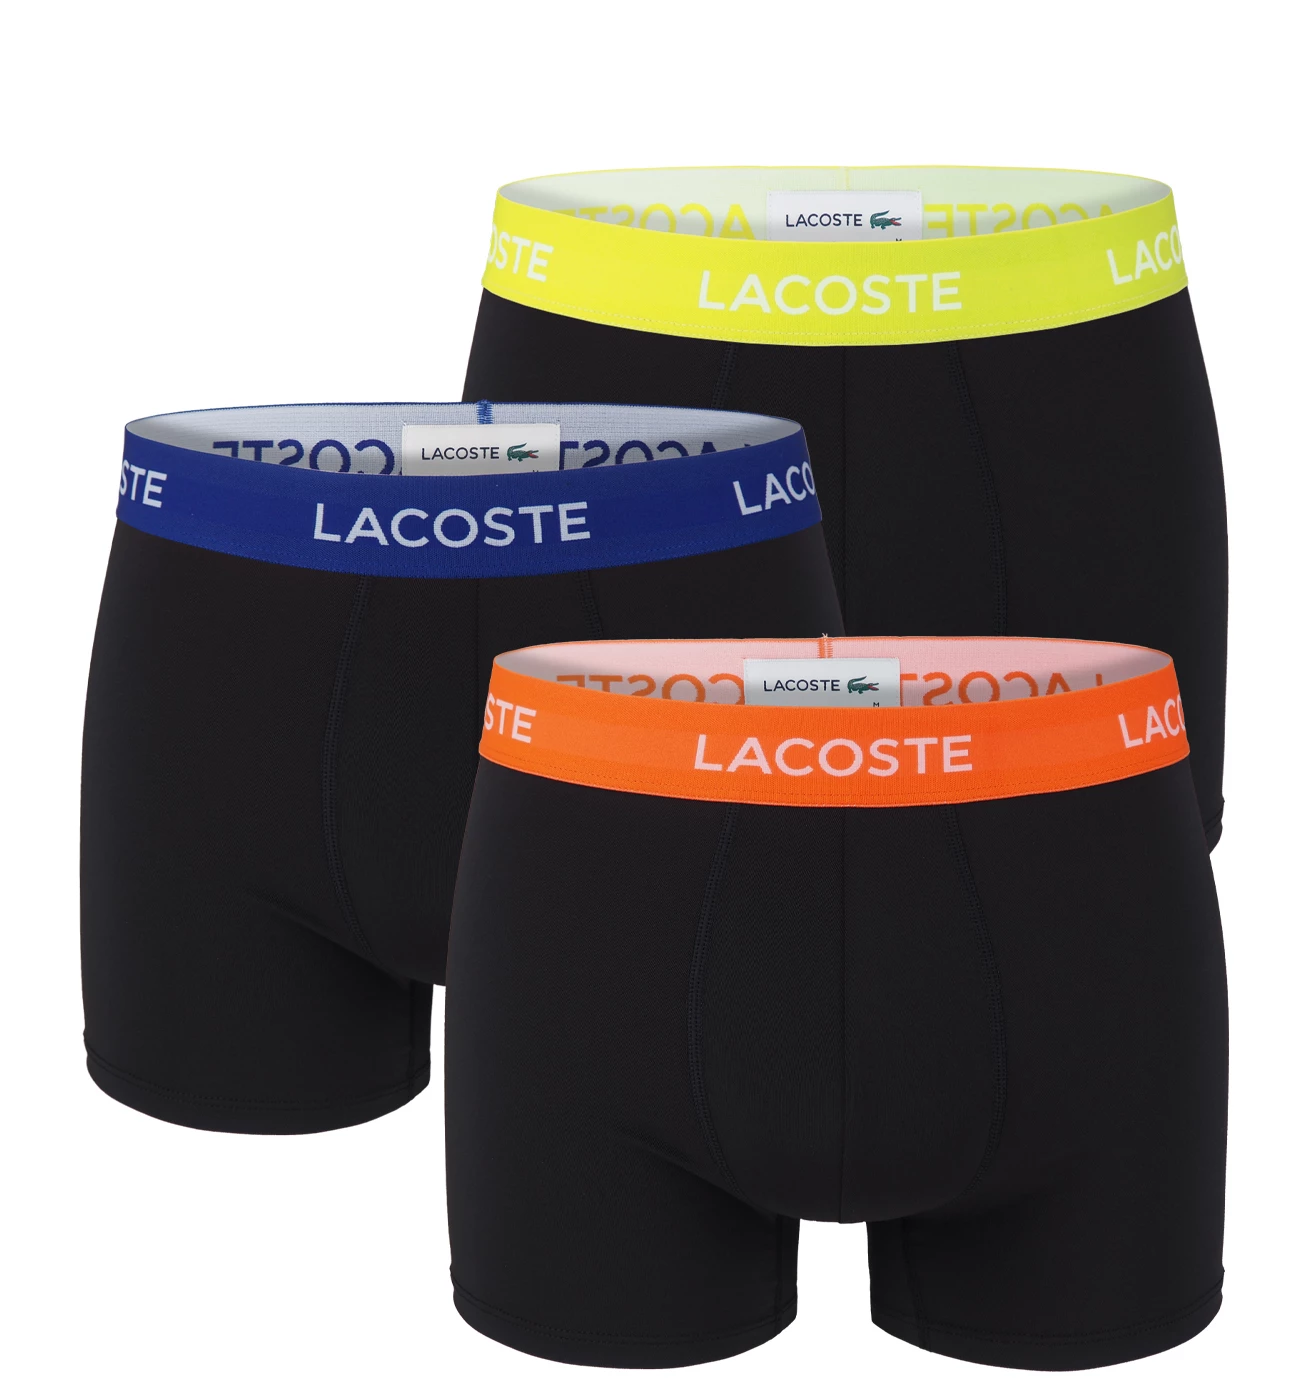 LACOSTE - boxerky 3PACK Lacoste motion microfiber black s farebným pásom